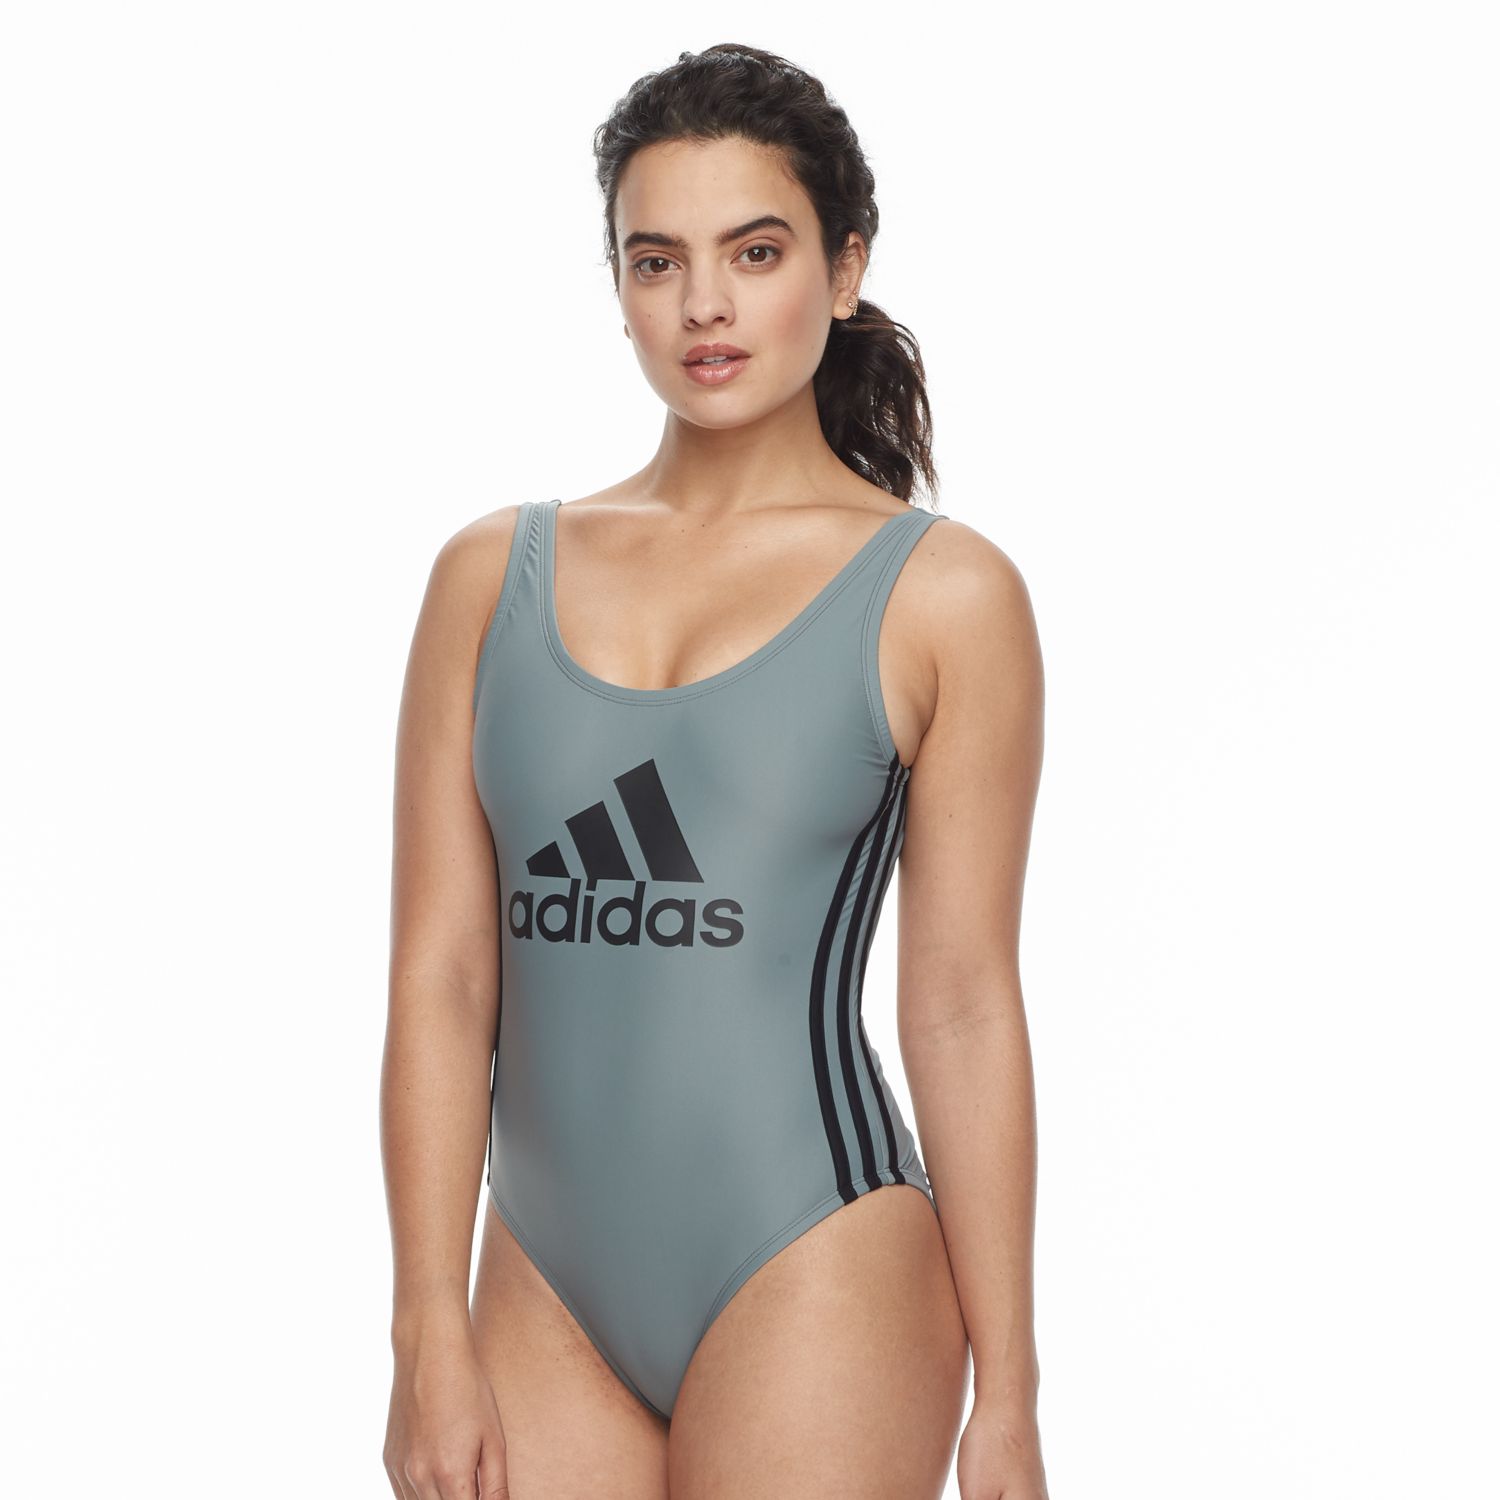 adidas one piece bathing suit